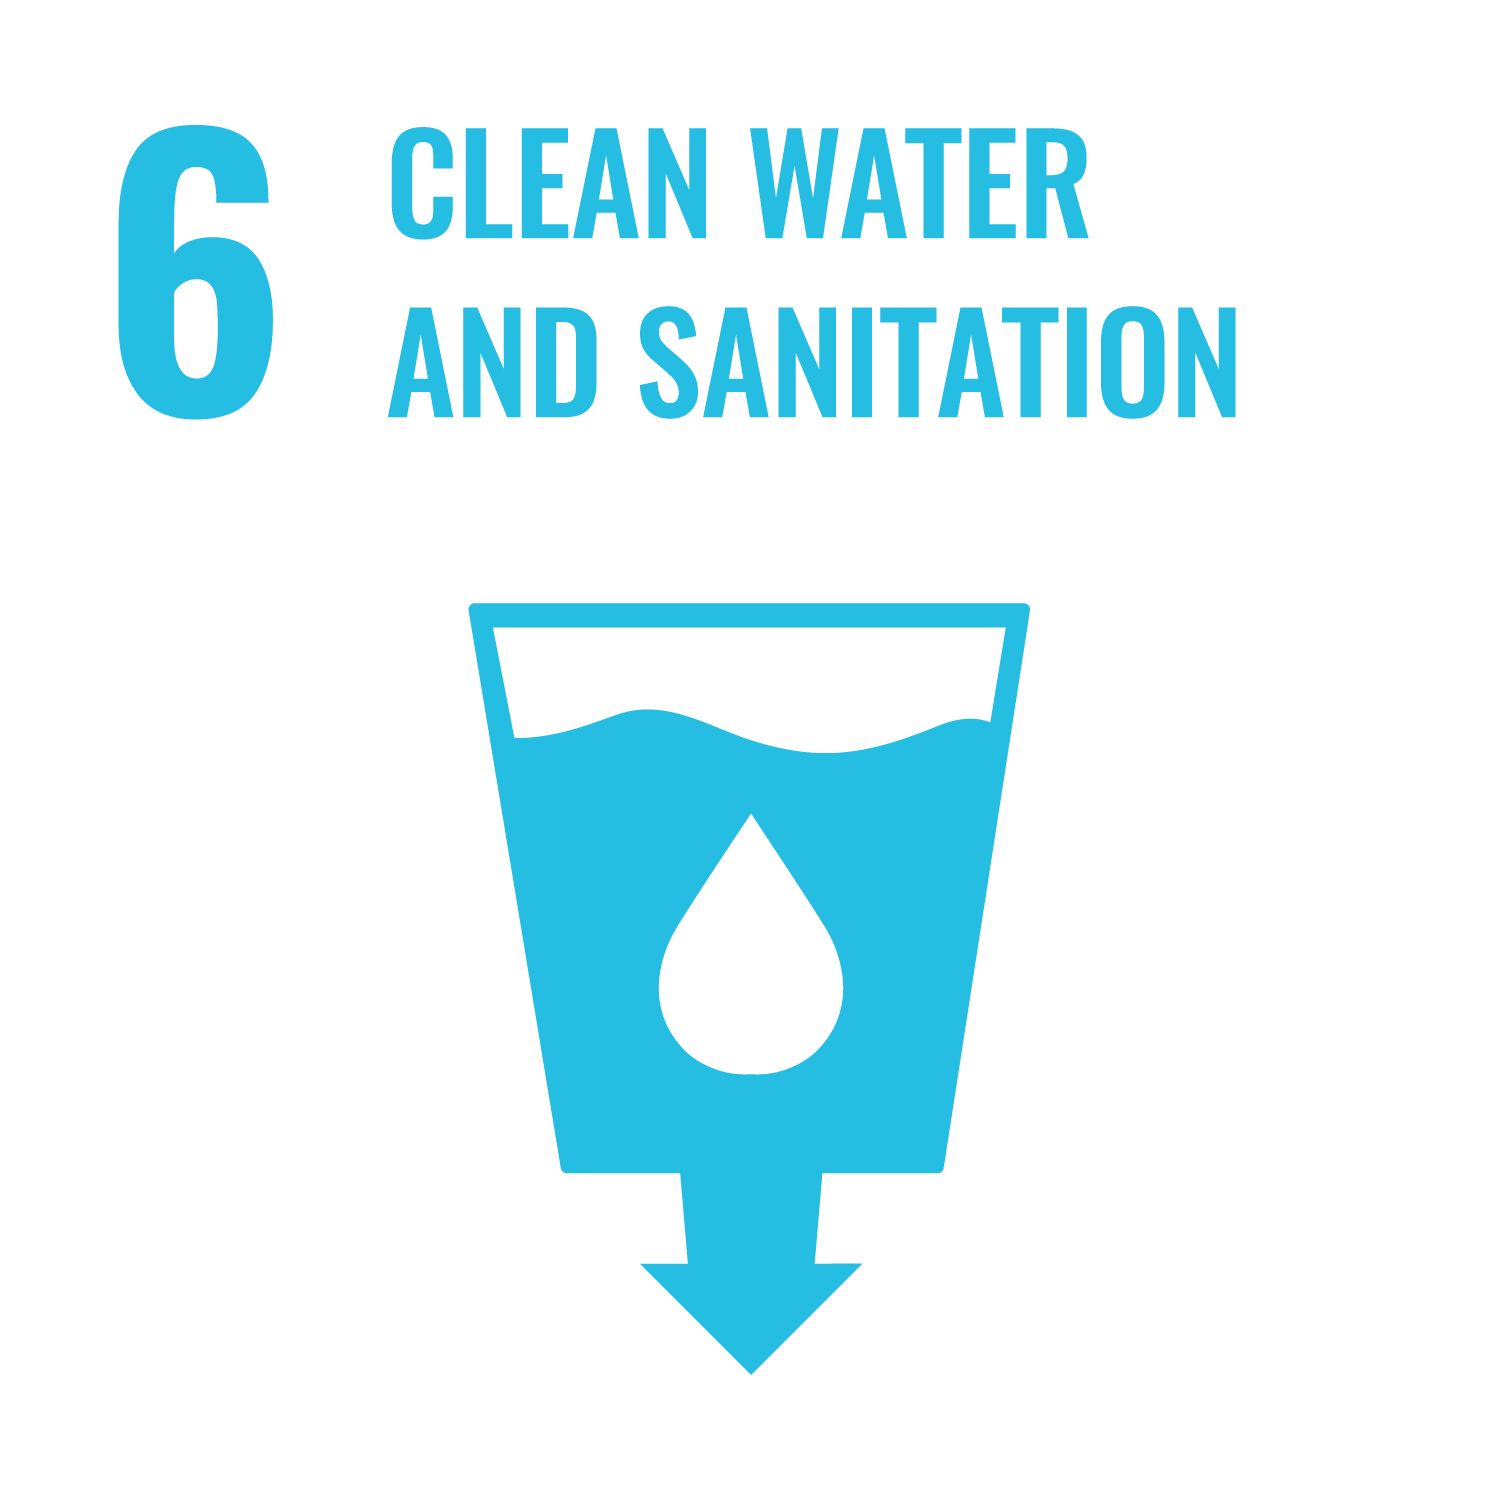 UN SDG 6: Clean water and sanitation